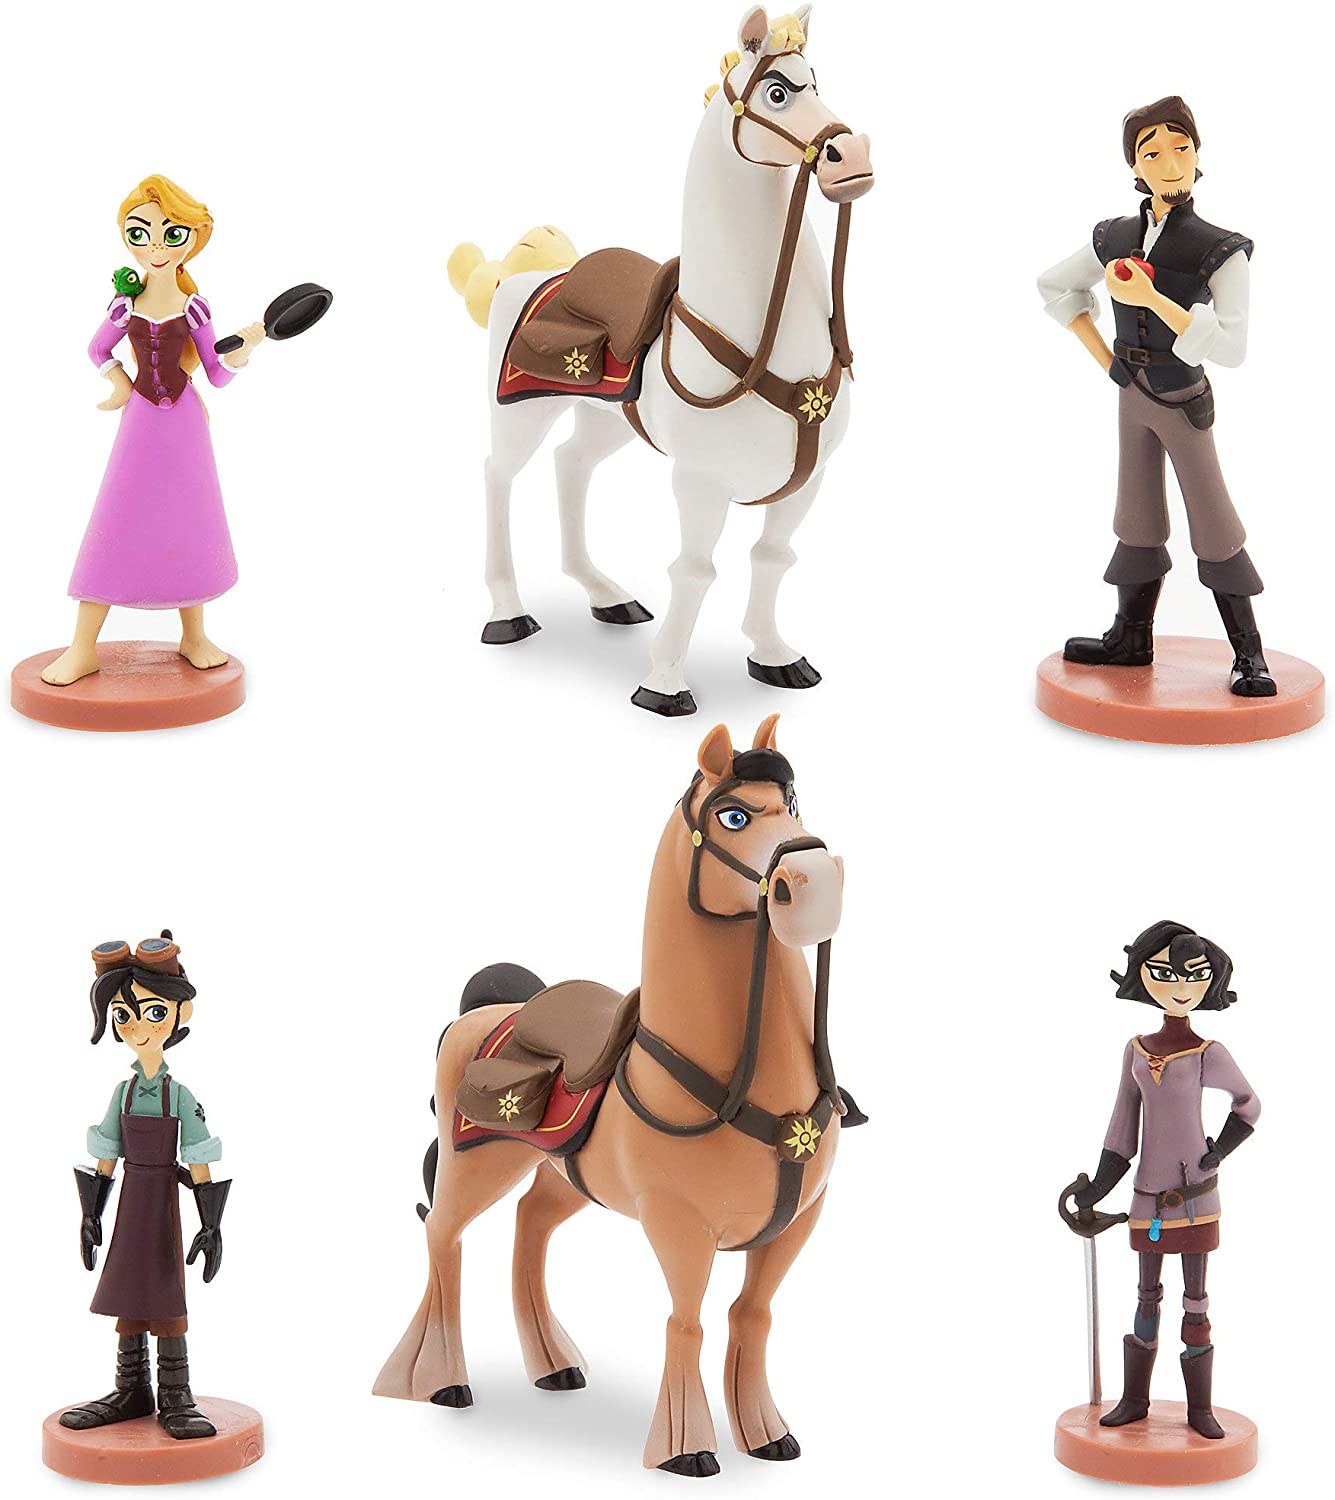 Disney Tangled 6 piece Figurine Playset Includes: Rapunzel, Pascal, Eugene, Cassandra, Maximus